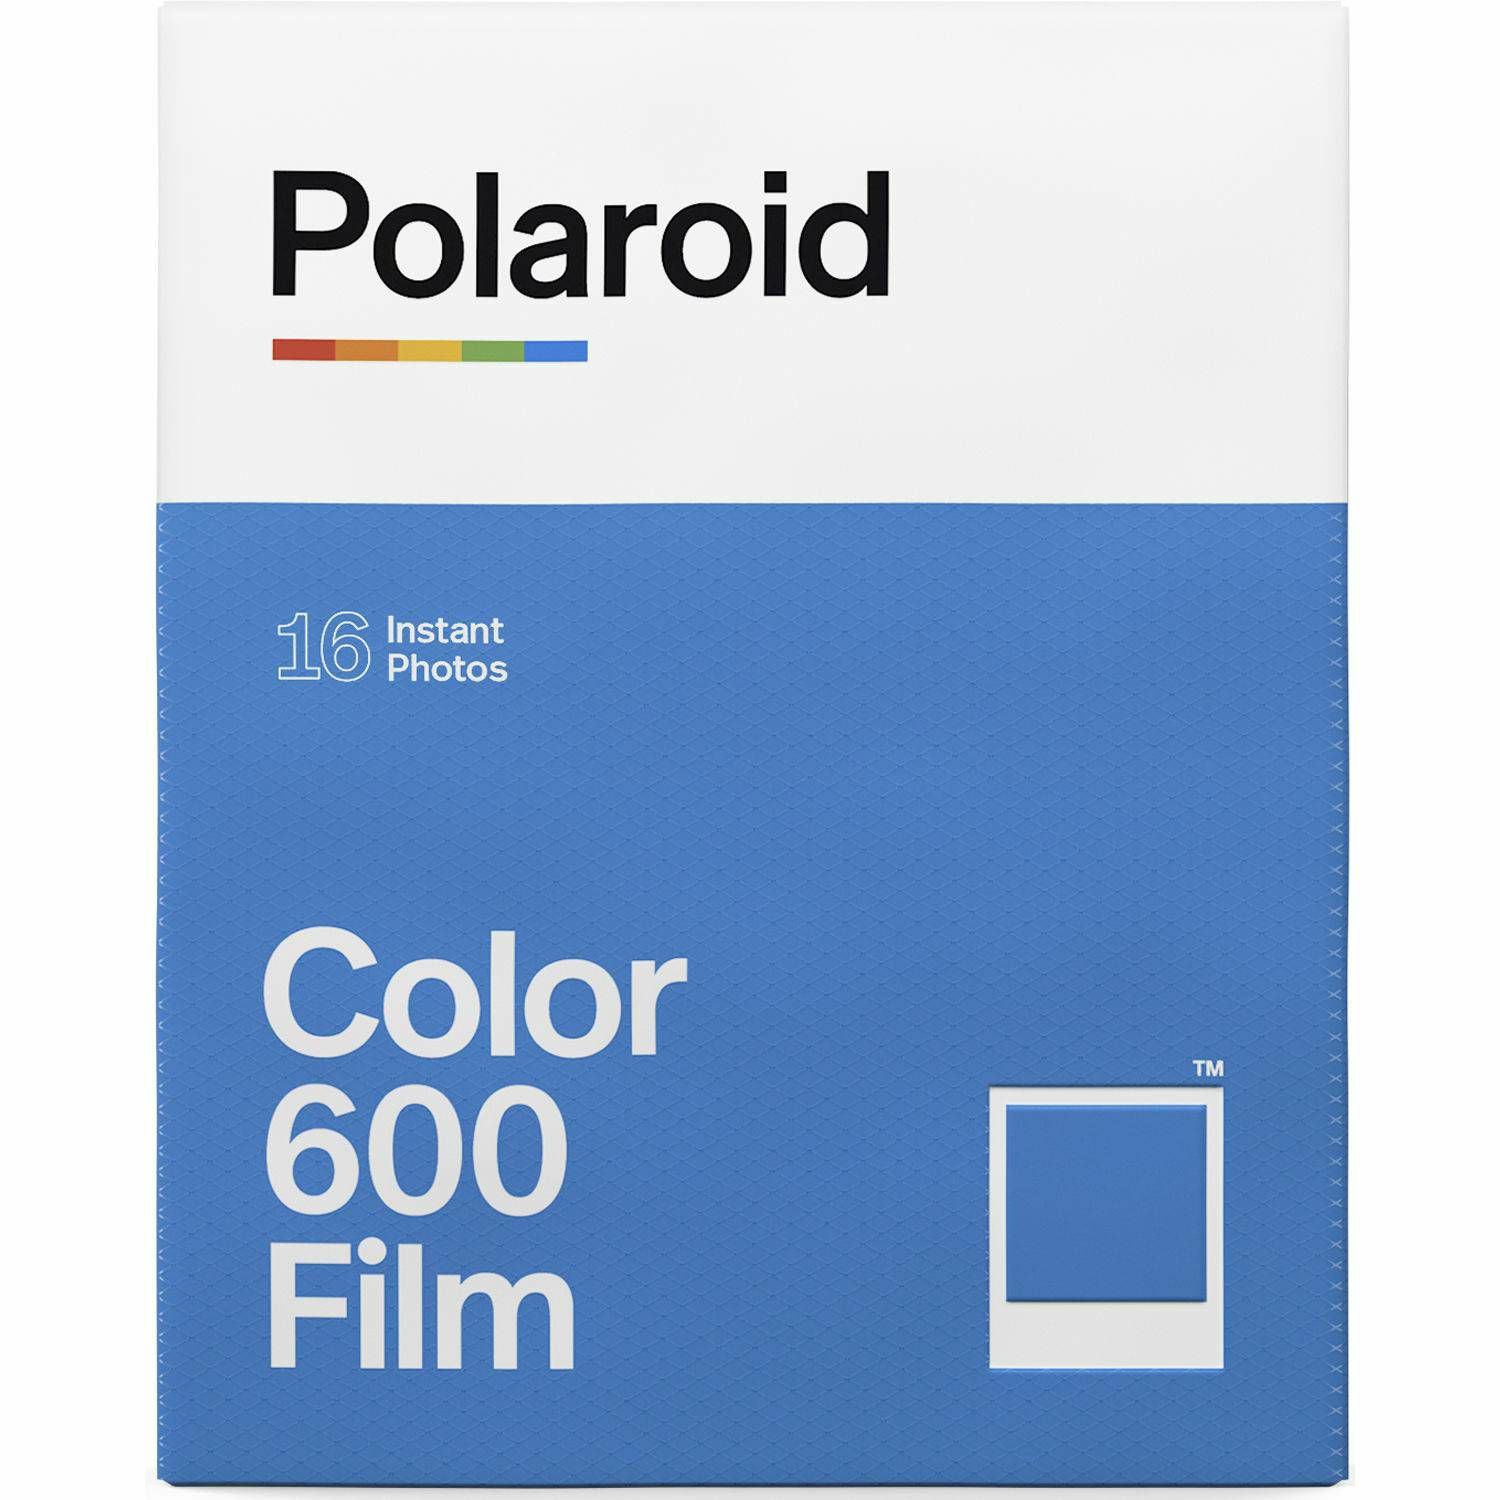 Polaroid Originals Color Film for 600 Double Pack foto papir za fotografije u boji za Instant fotoaparate (006012)